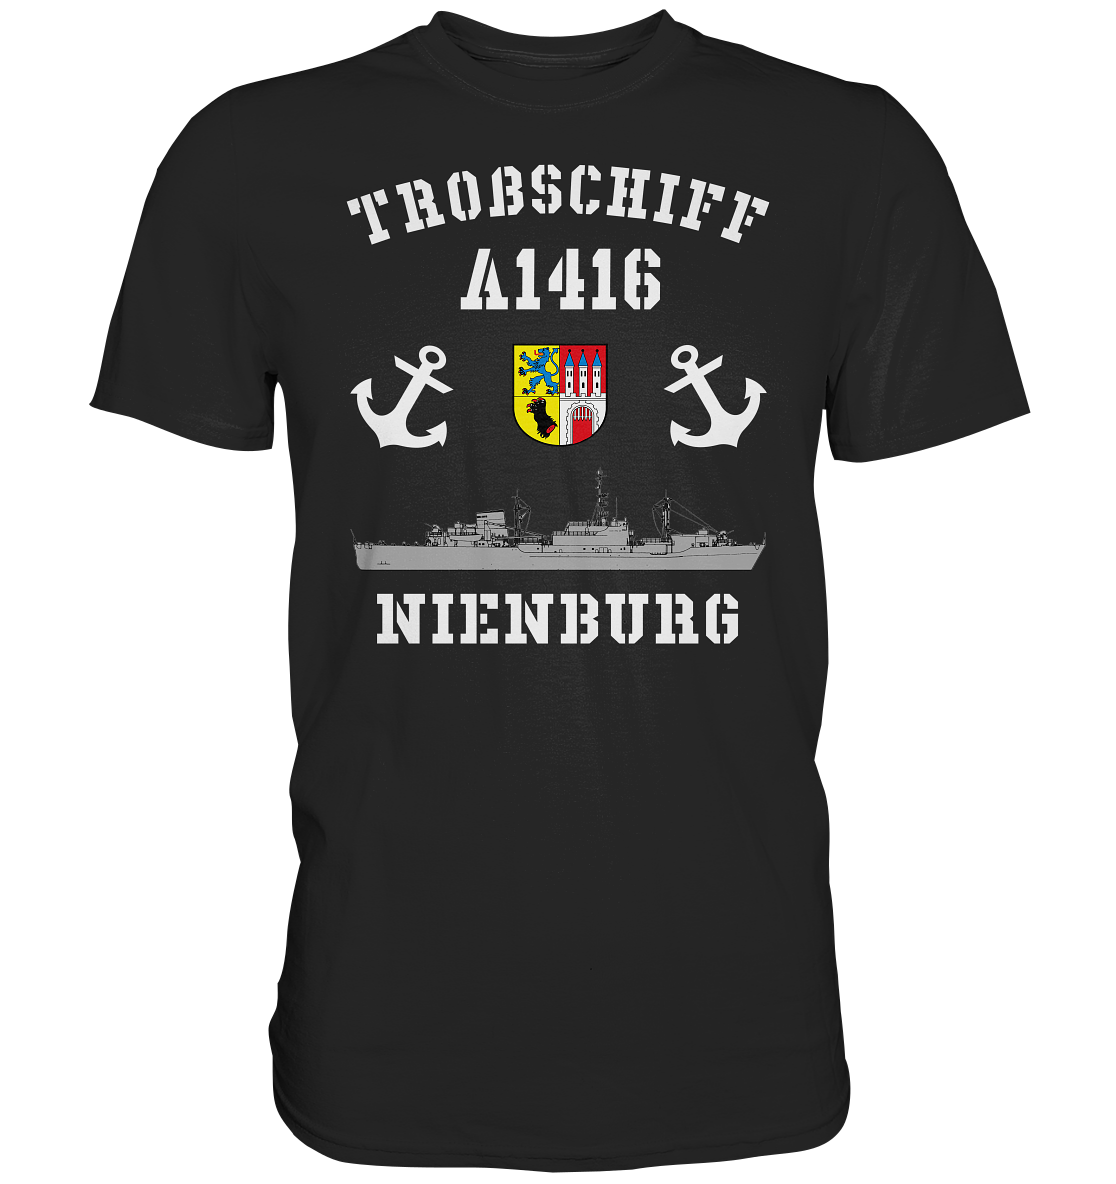 Troßschiff A1416 NIENBURG - Premium Shirt